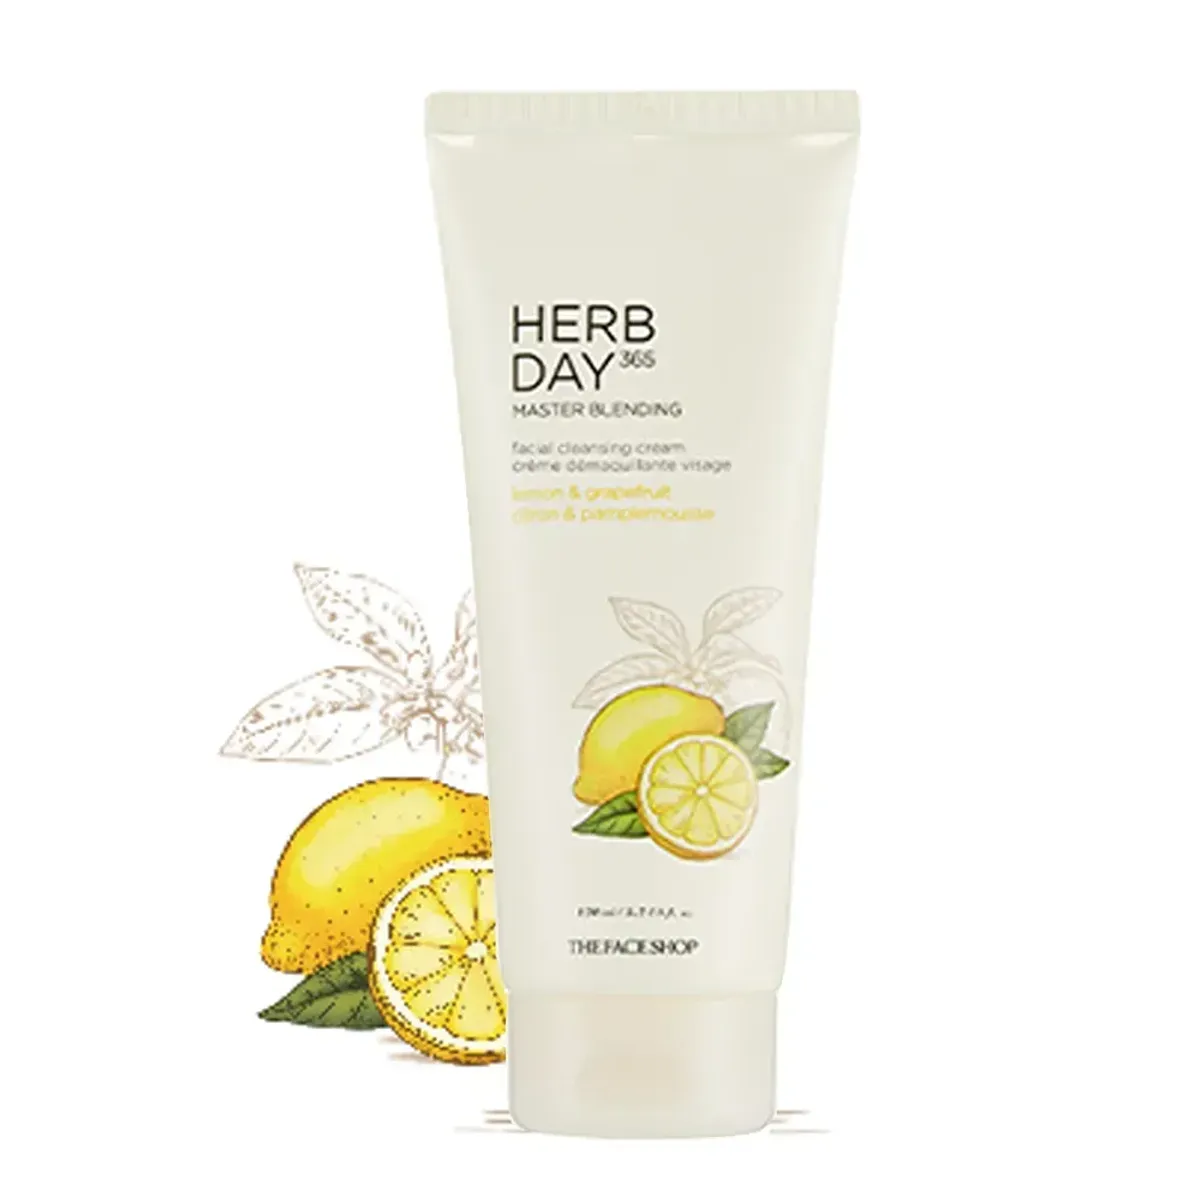 kem-tay-trang-herb-day-365-master-blending-facial-cleansing-cream-lemon-grapefruit-170ml-2